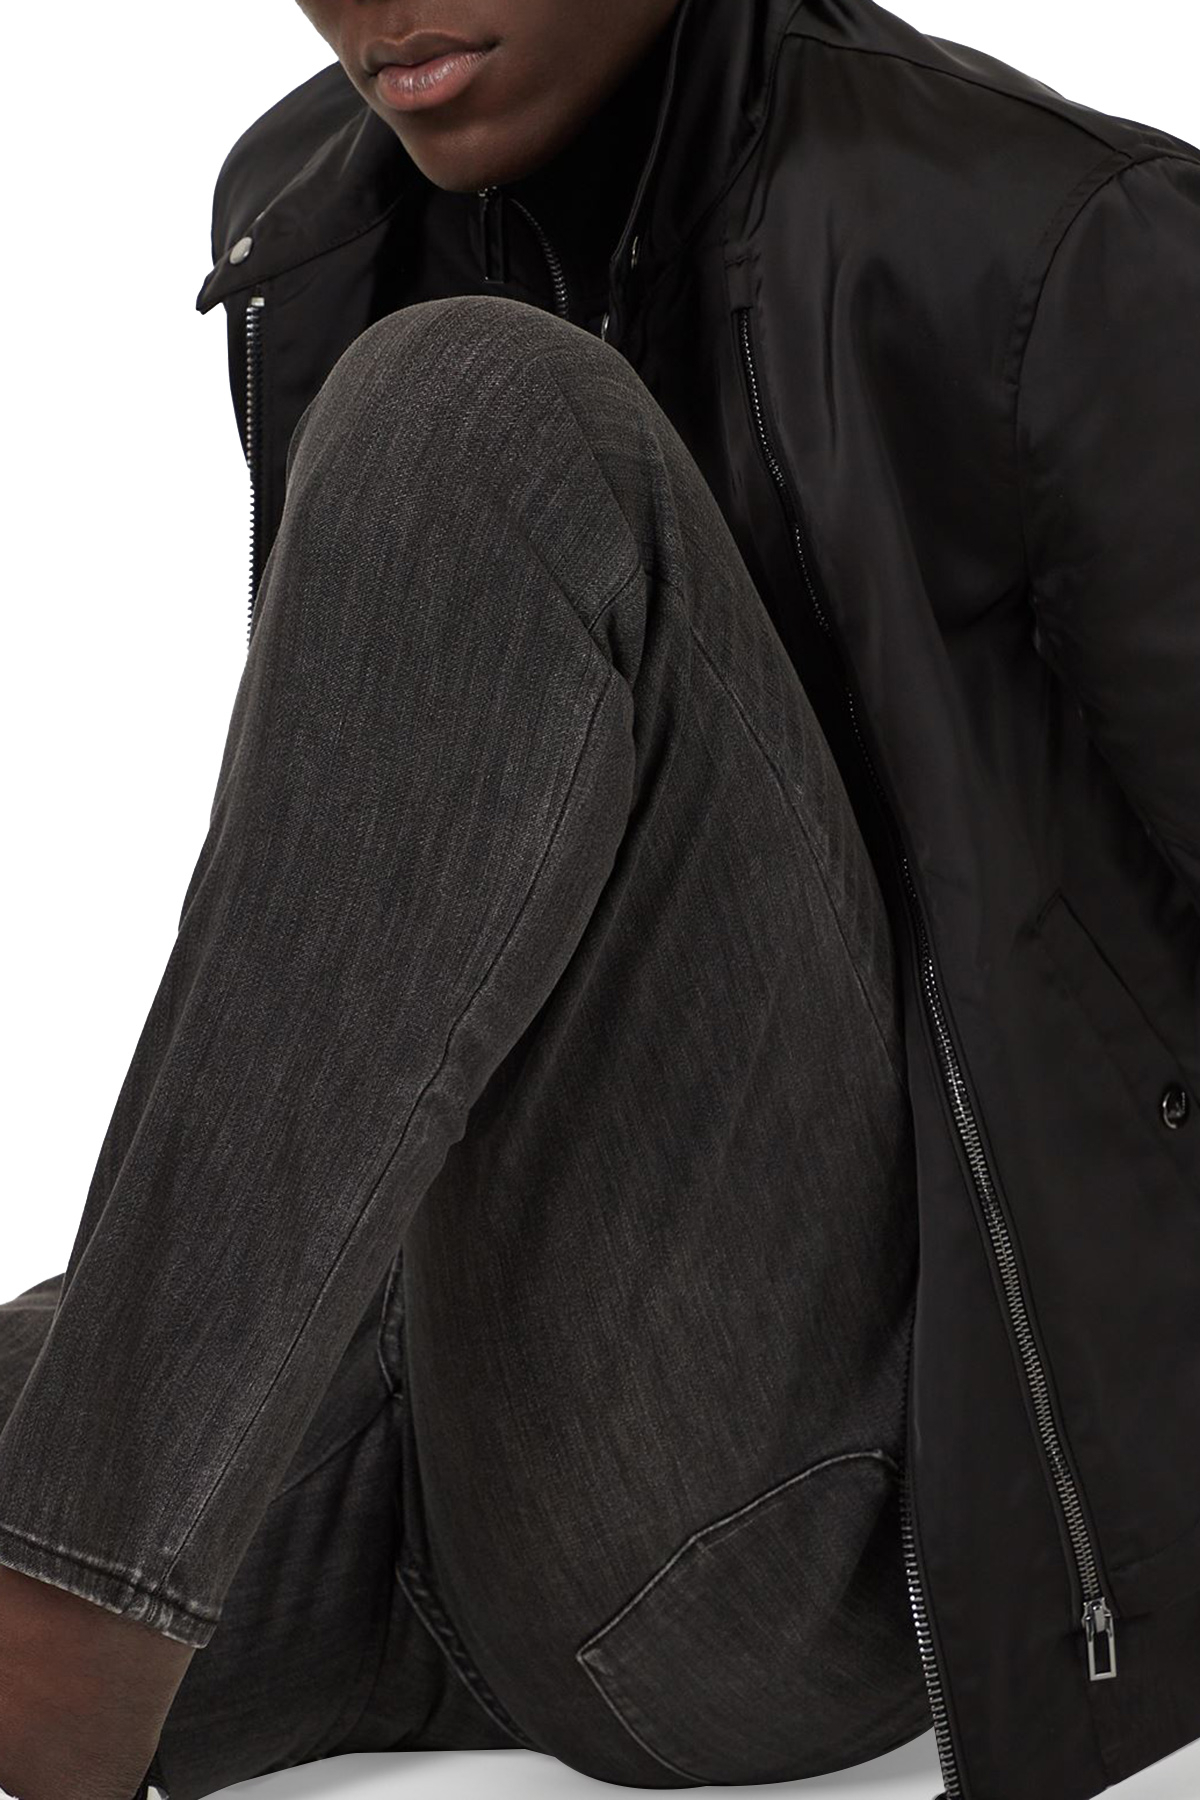 Emporio Armani Düşük Bel Extra Slim Fit J11 Jeans Erkek Kot Pantolon 3K1J11 1DHDZ 0006 SİYAH